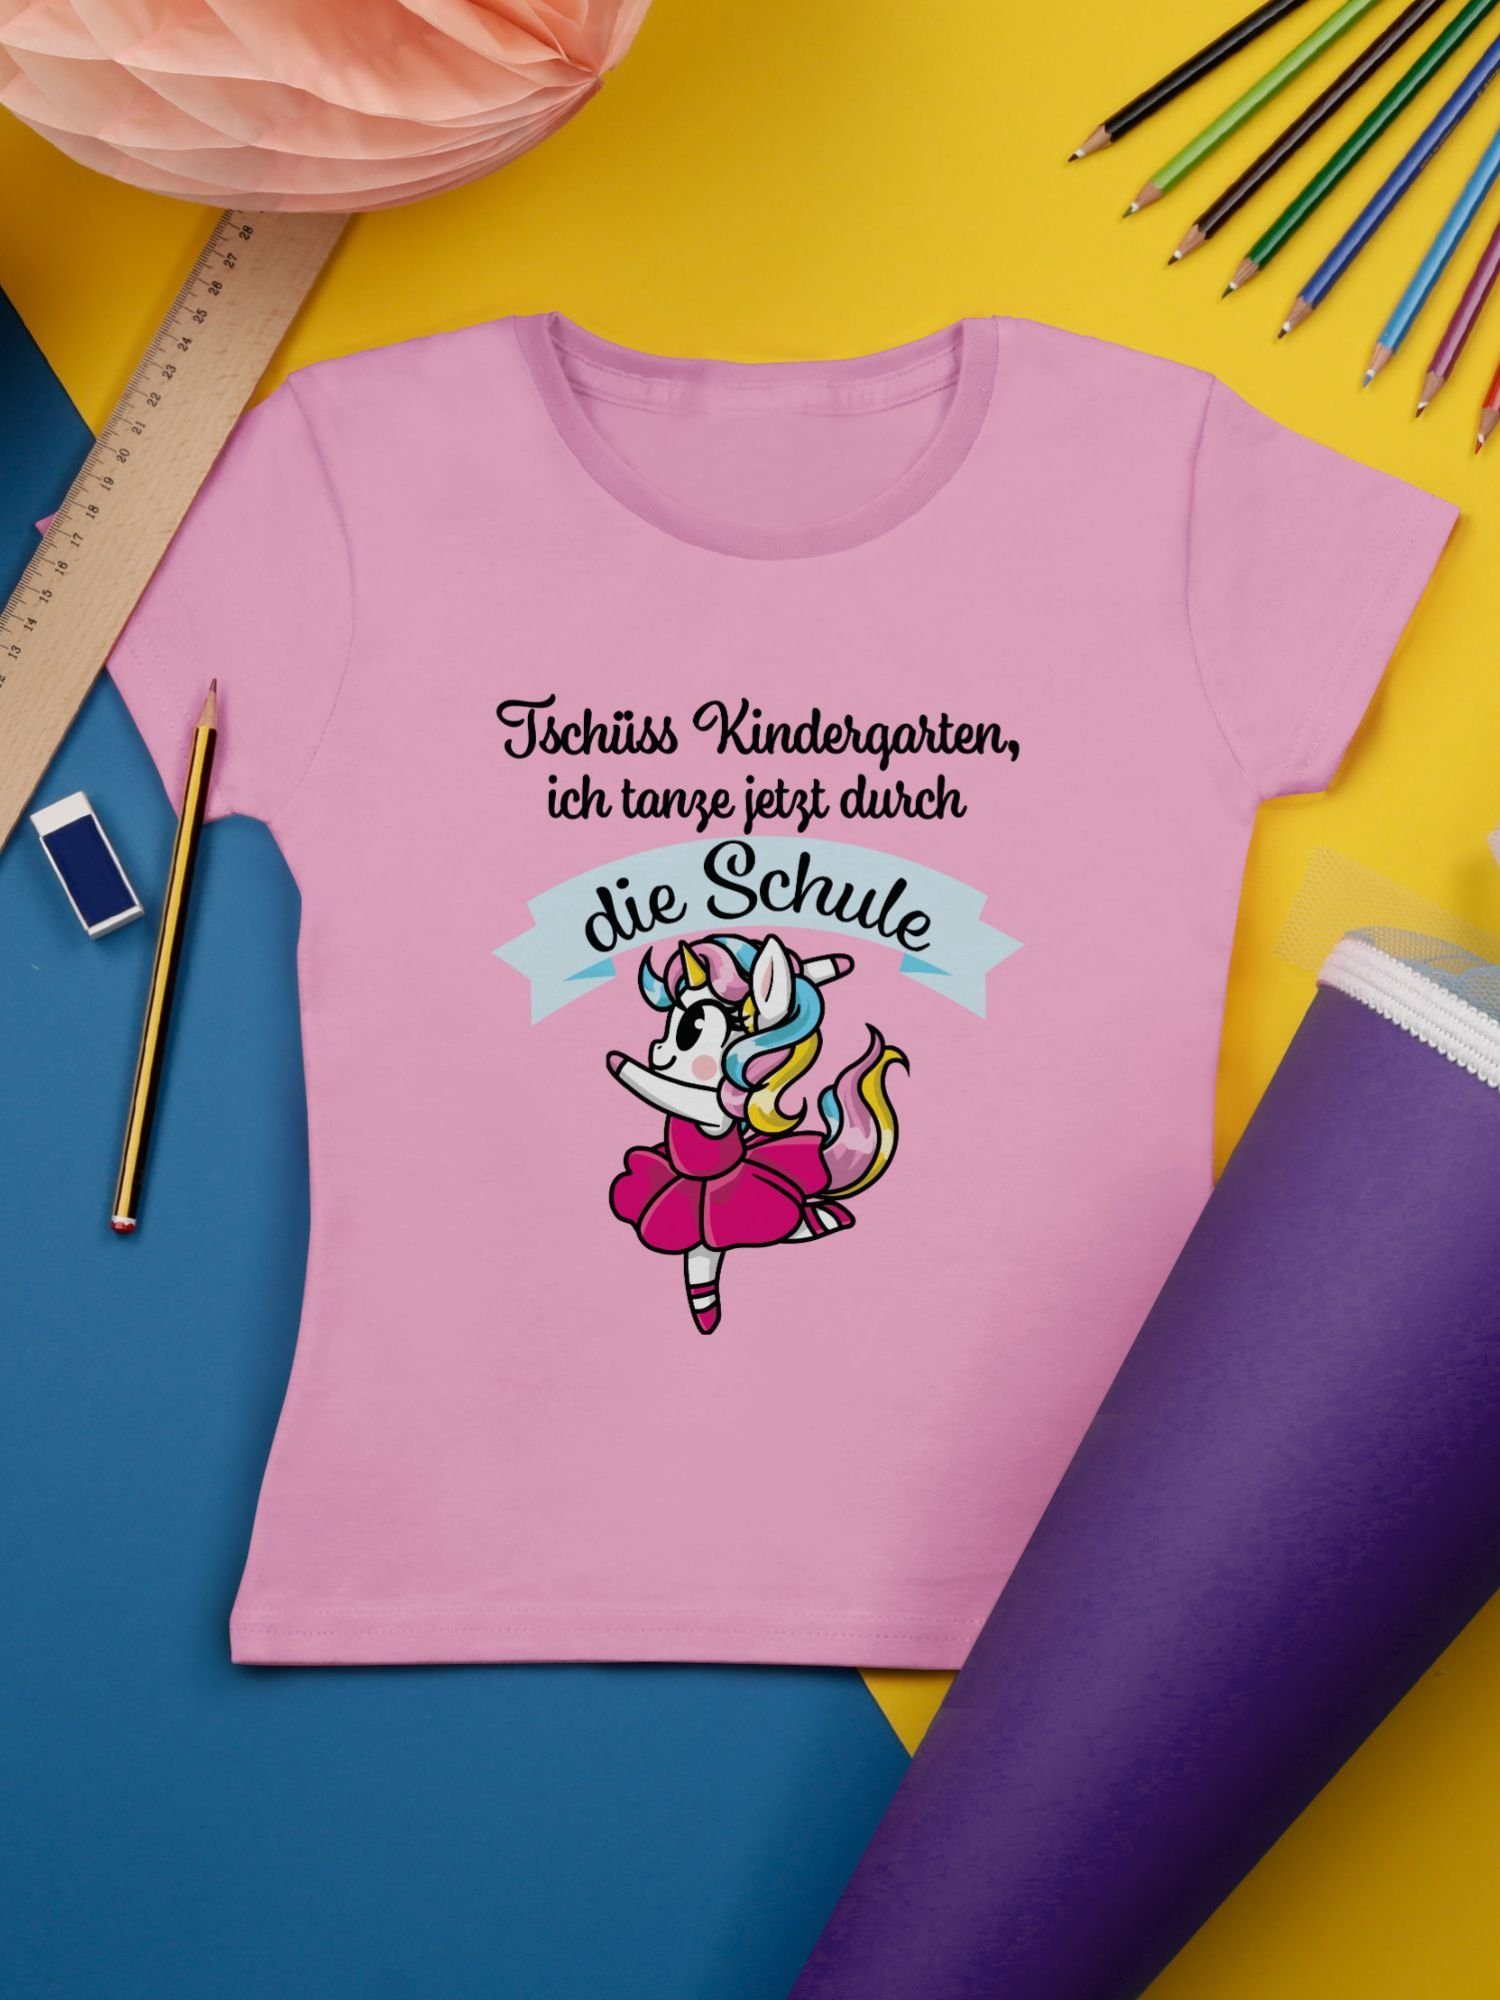 ich Einhorn Einschulung Schule jetzt die Mädchen Rosa tanze Tschüss Ballett T-Shirt Kindergarten Shirtracer durch 2